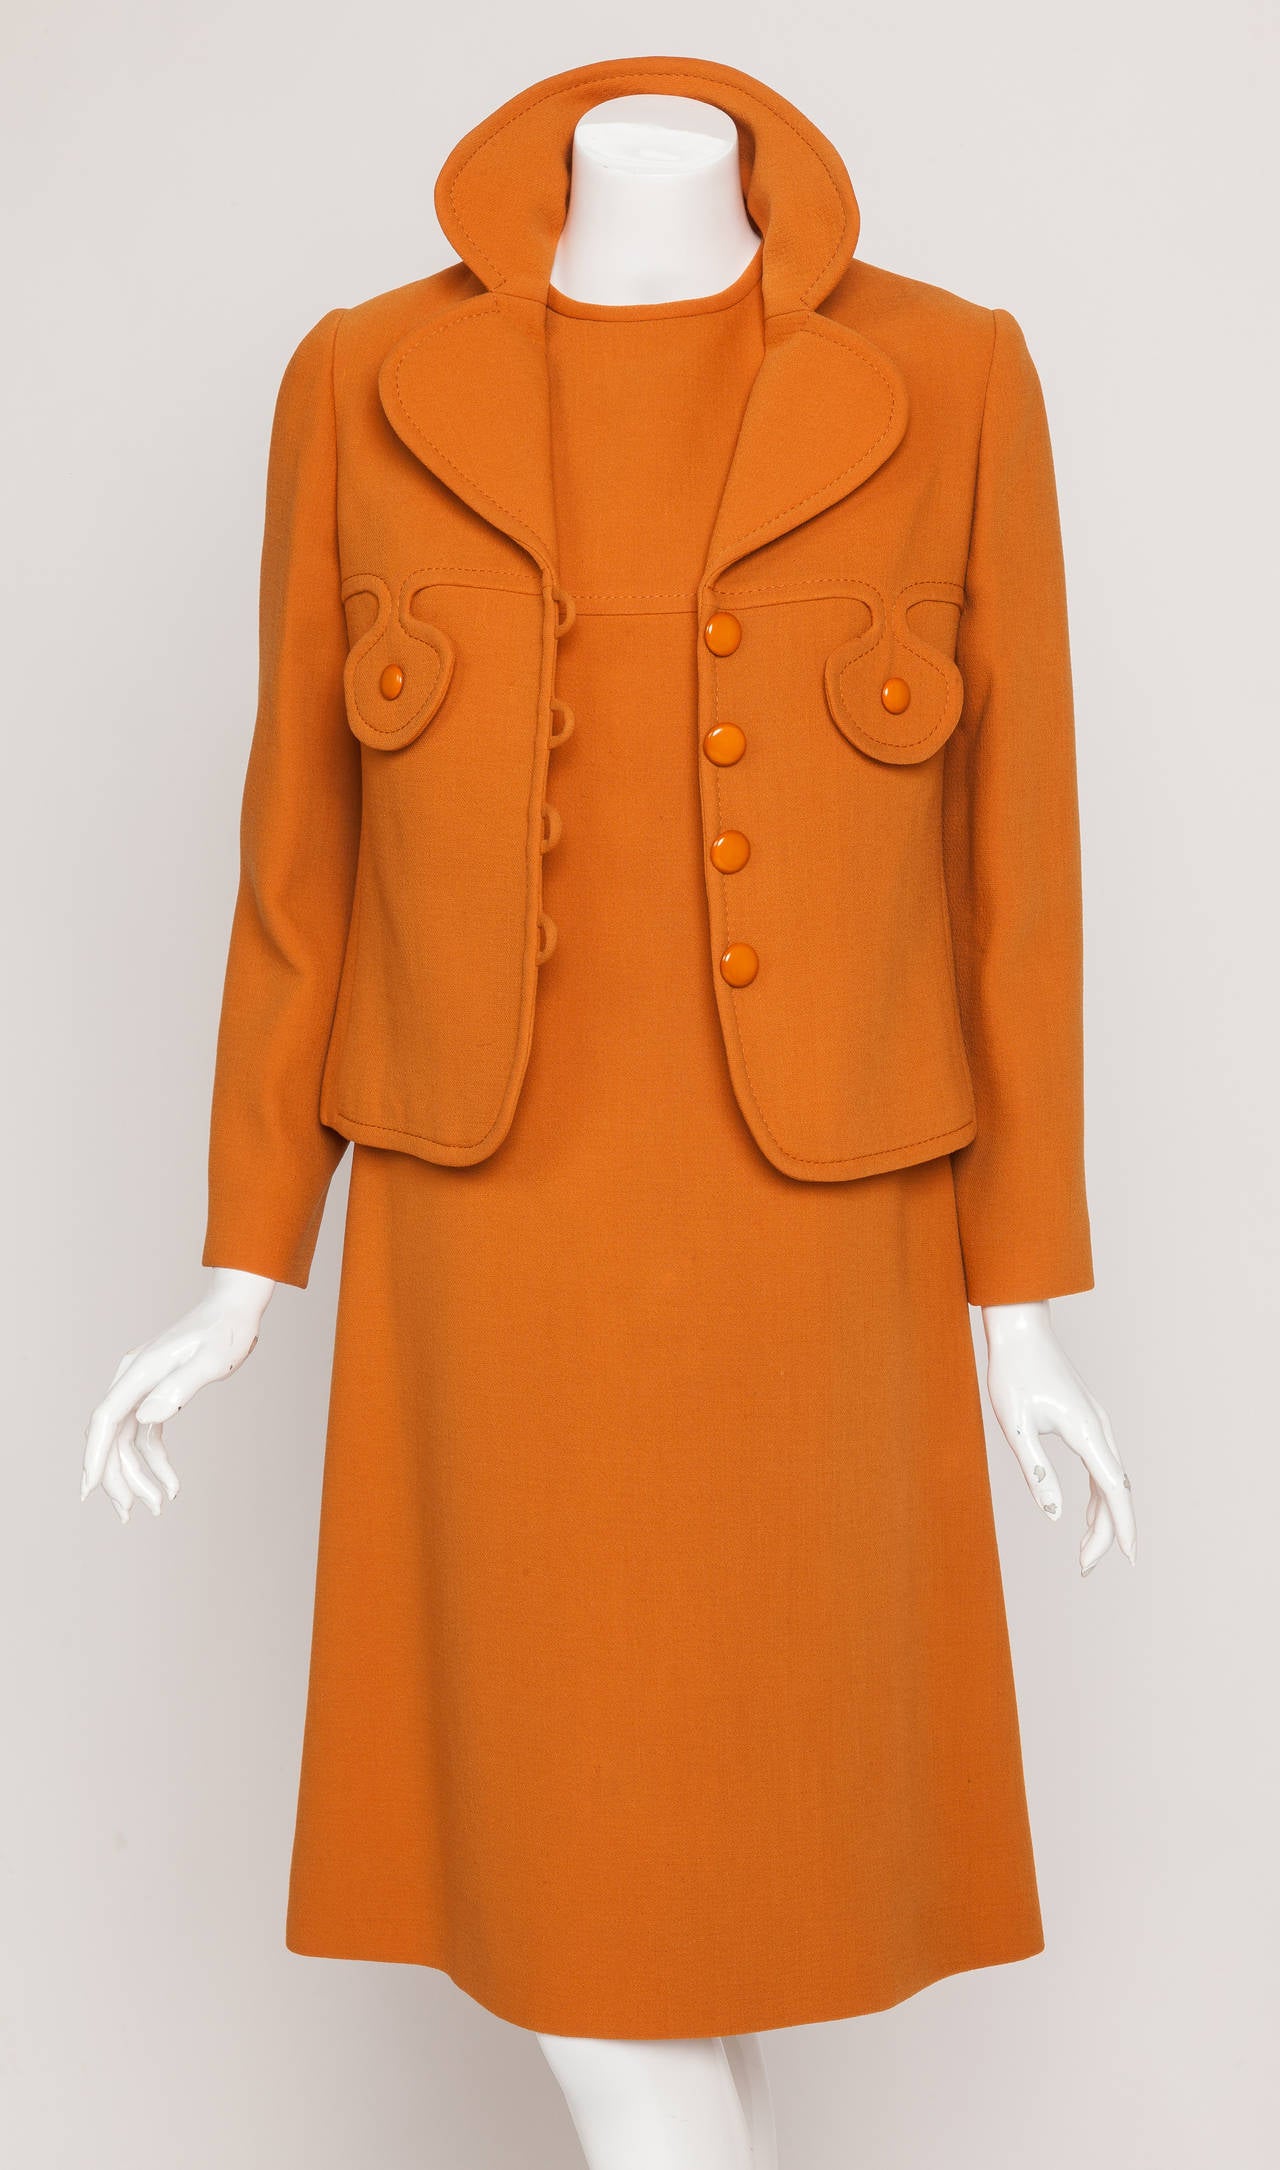 Women's Pierre Cardin Space Age Mod Wool Crepe Jacket and Dress Ensemble ca.1971